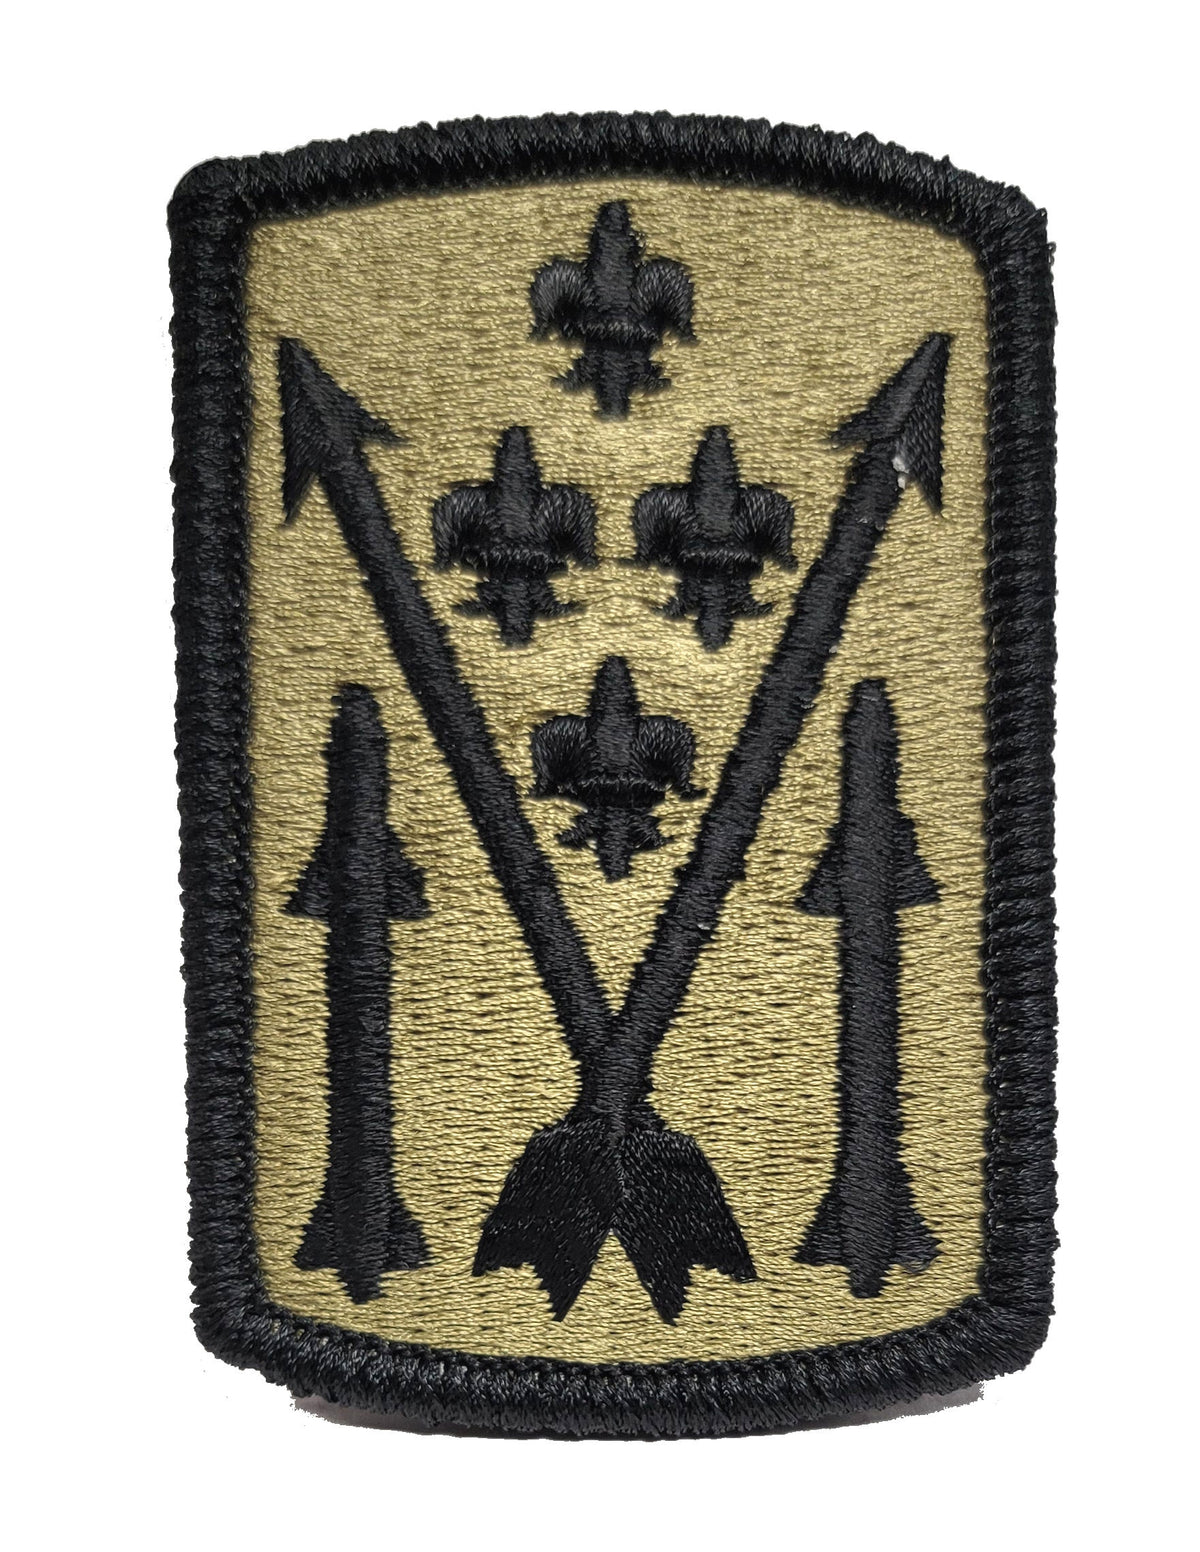 52nd Air Defense Artillery (ADA) Brigade OCP Patch